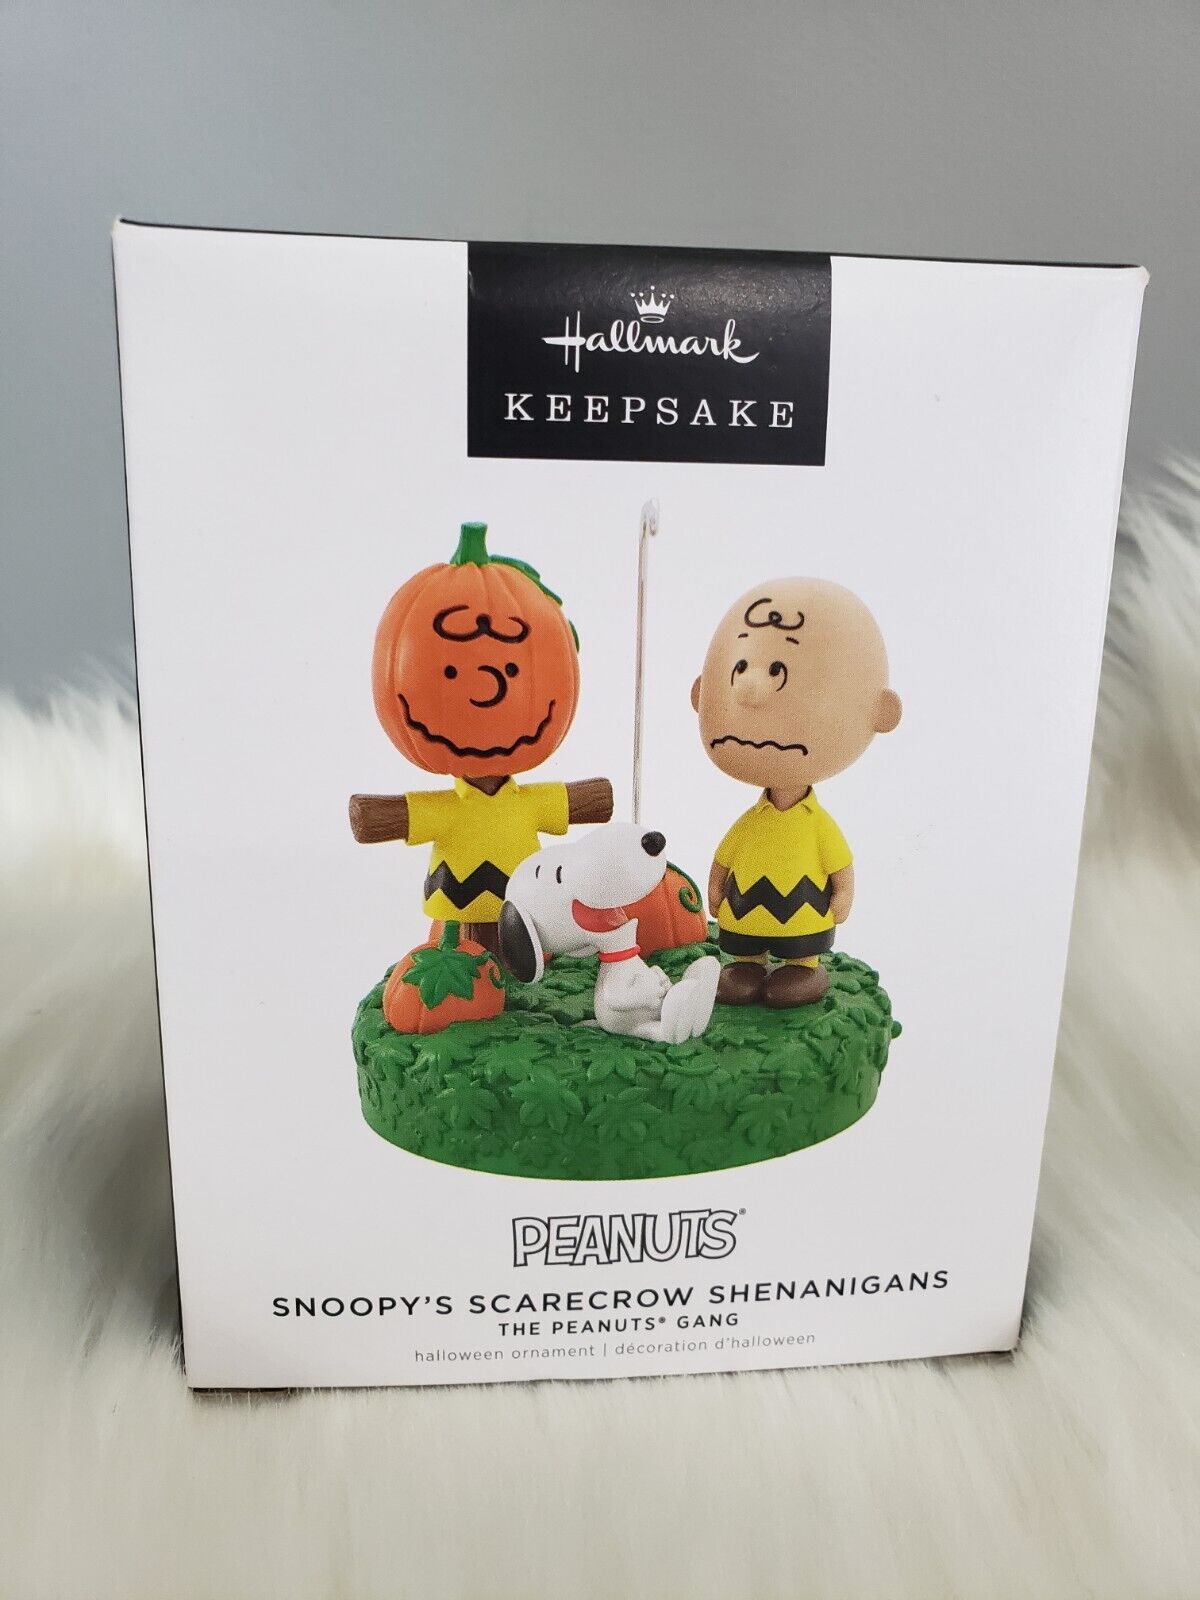 NEW Hallmark Keepsake Snoopys Scarecrow Shenanigans Halloween Christmas Ornament